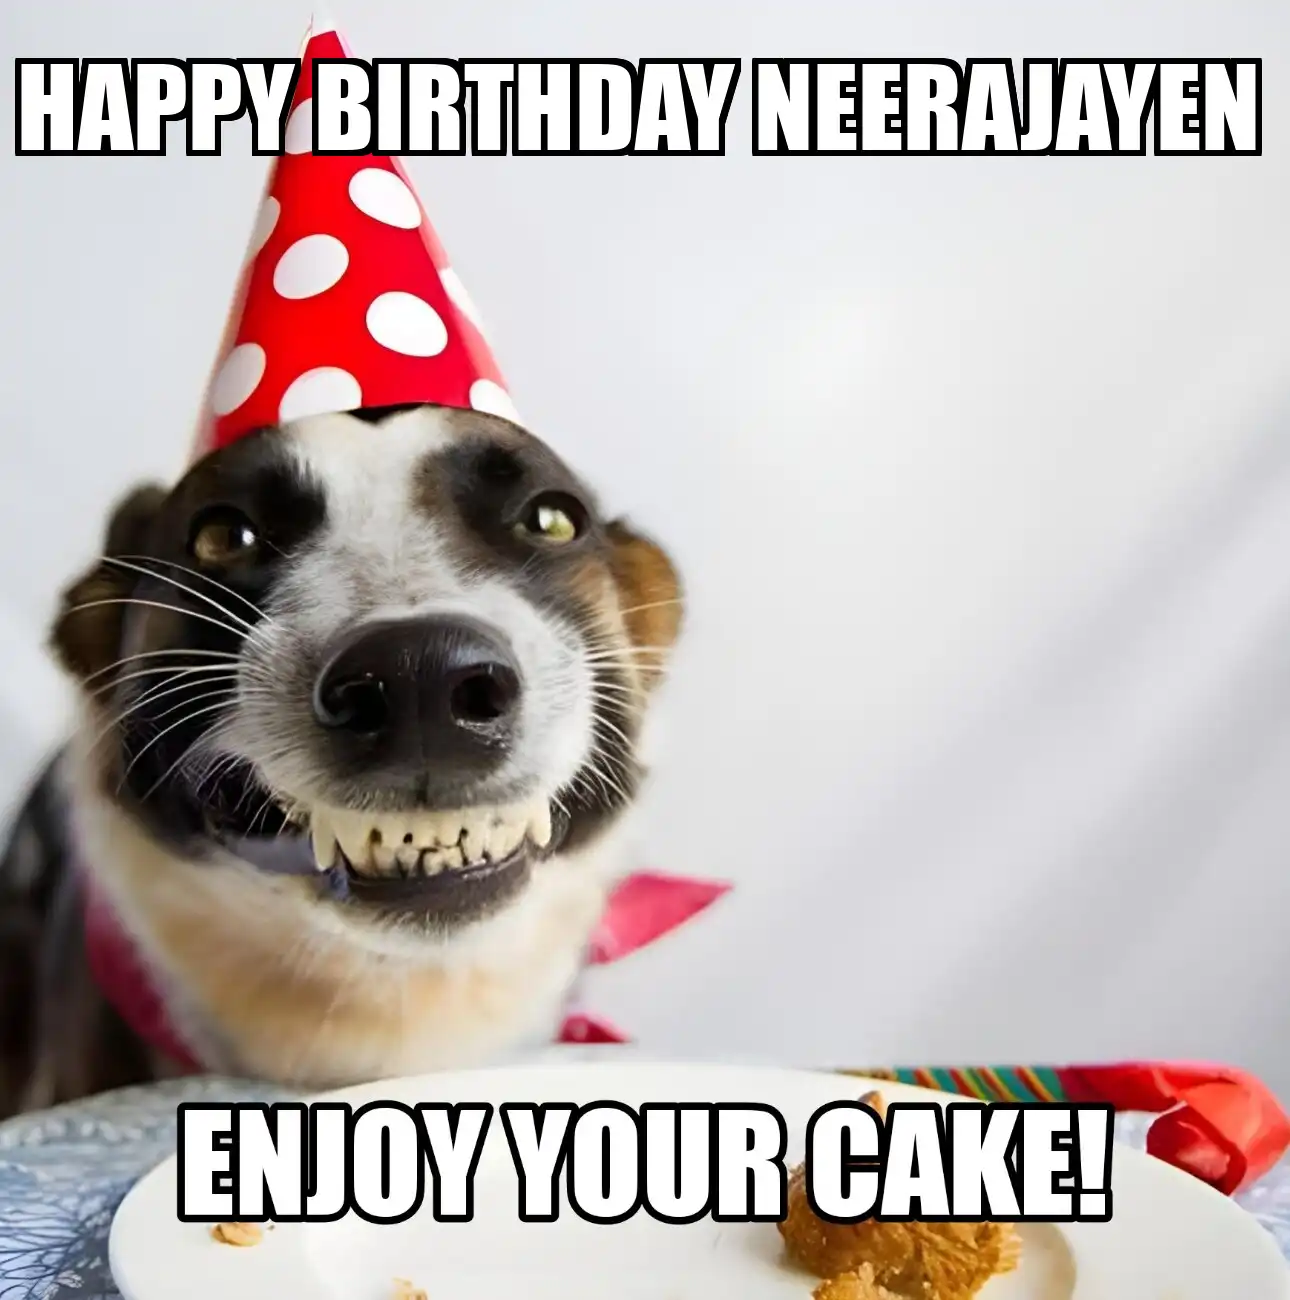 Happy Birthday Neerajayen Enjoy Your Cake Dog Meme